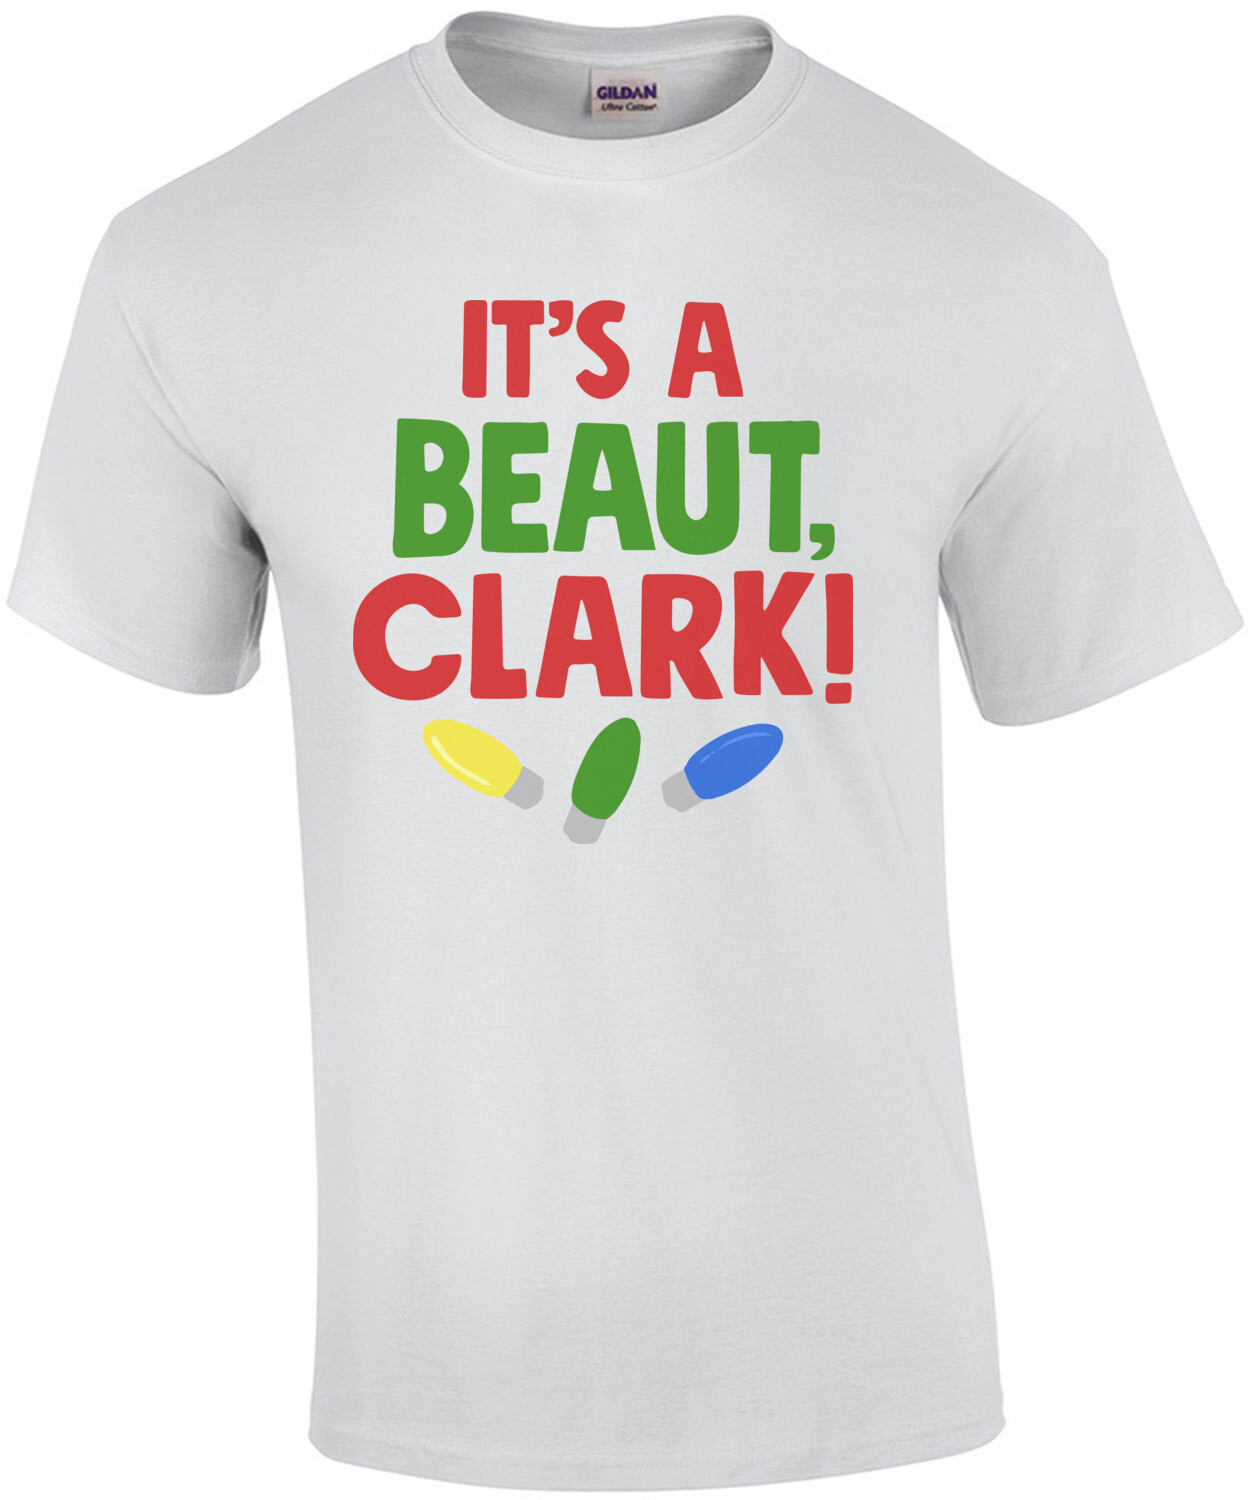 It's a beaut, Clark - Christmas Vacation T-Shirt